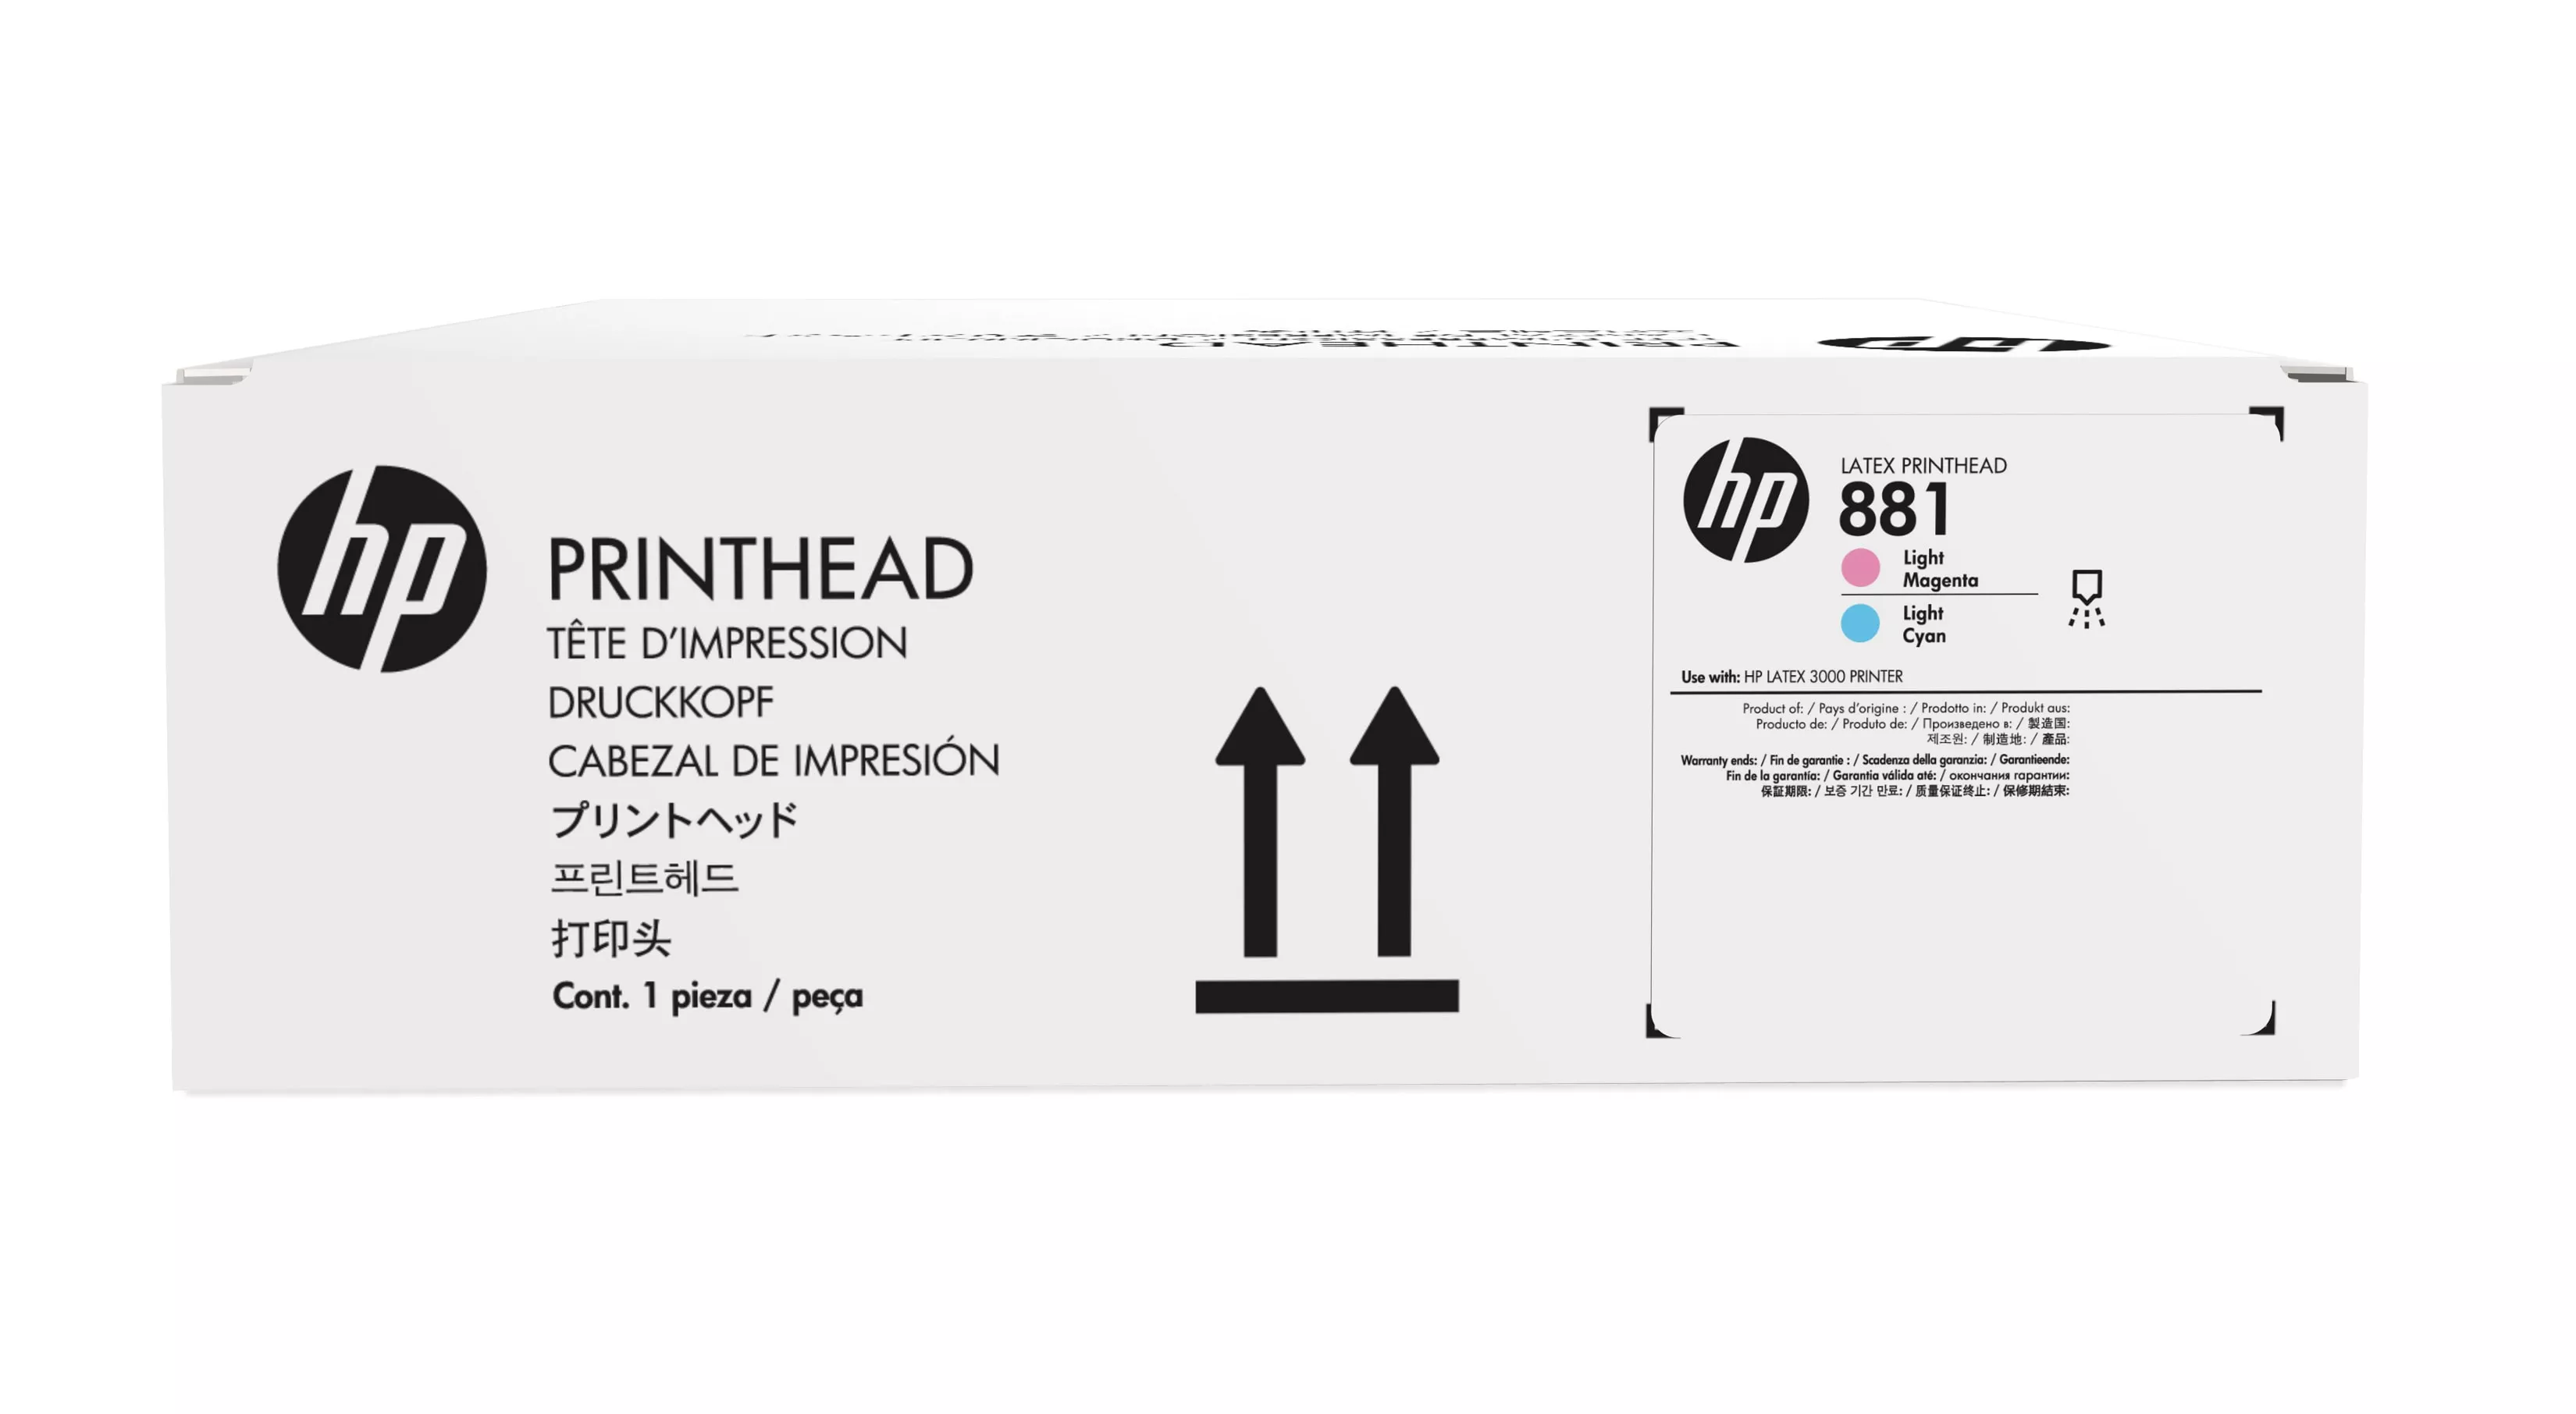 Vente HP 881 tête d'impression latex magenta clair/cyan clair HP au meilleur prix - visuel 2